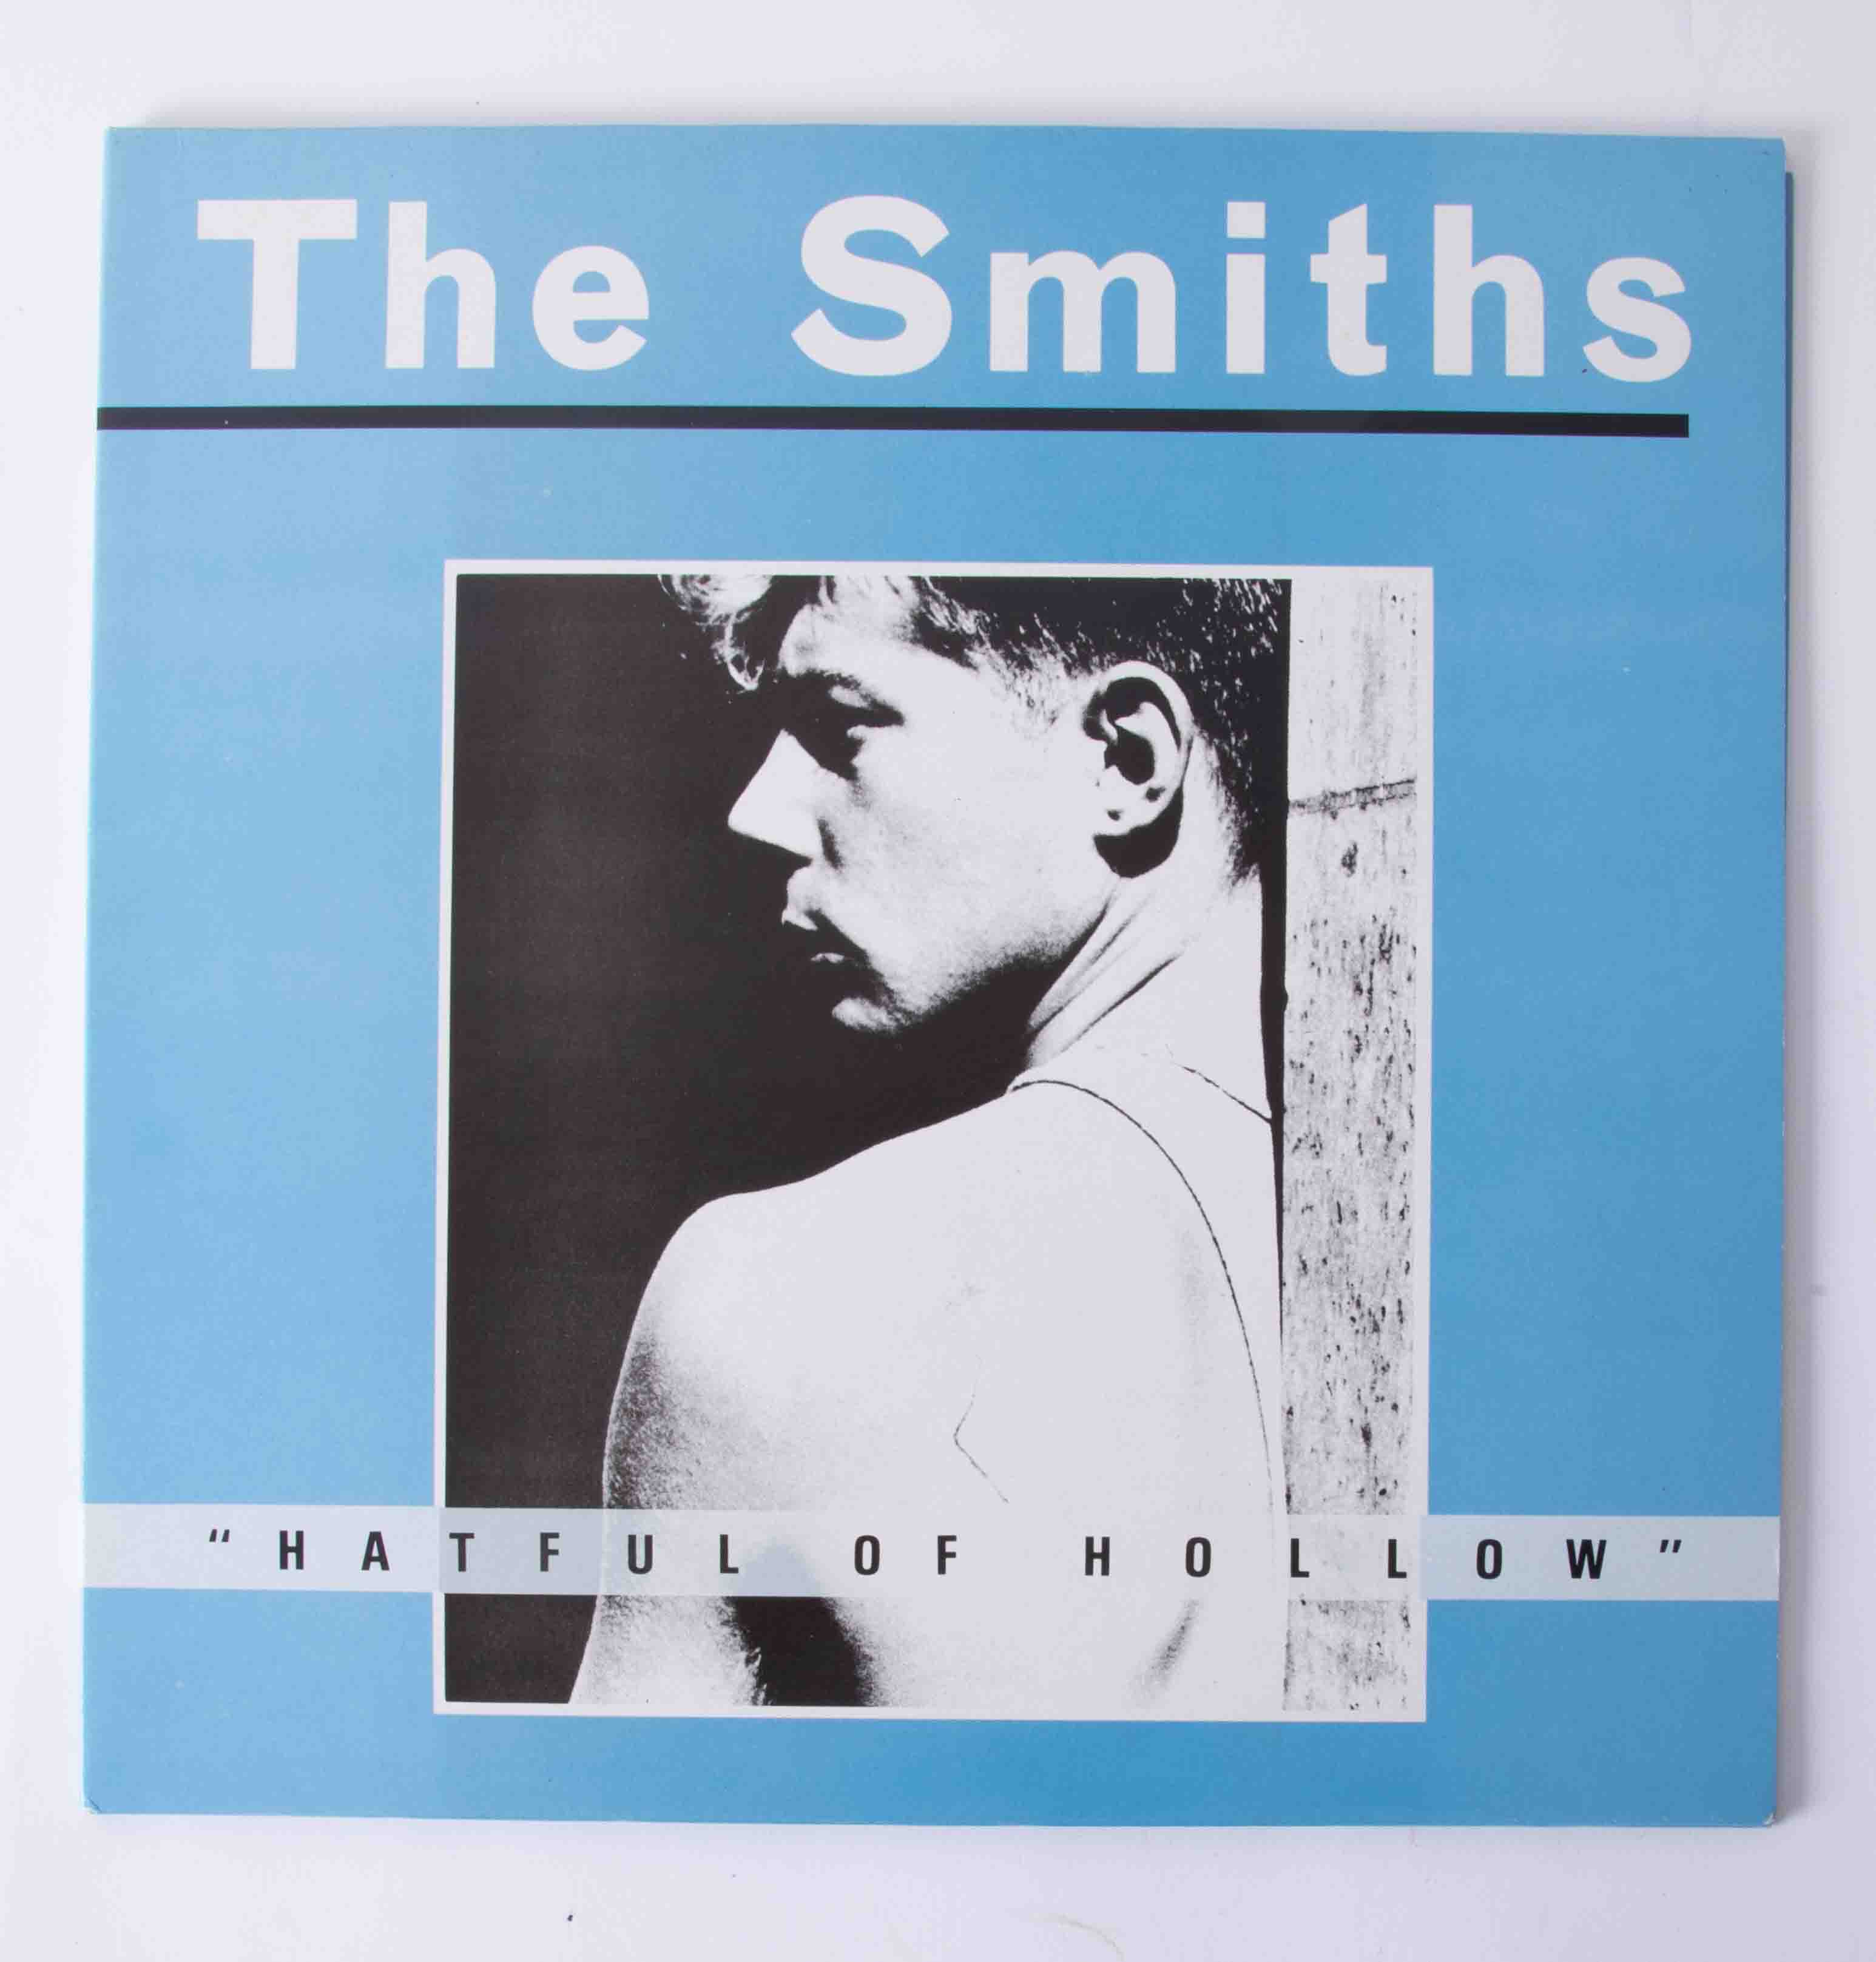 Vinyl LP The Smiths 'Hatful Of Hollow' 1984, rough 76, original pressing, near mint condition.